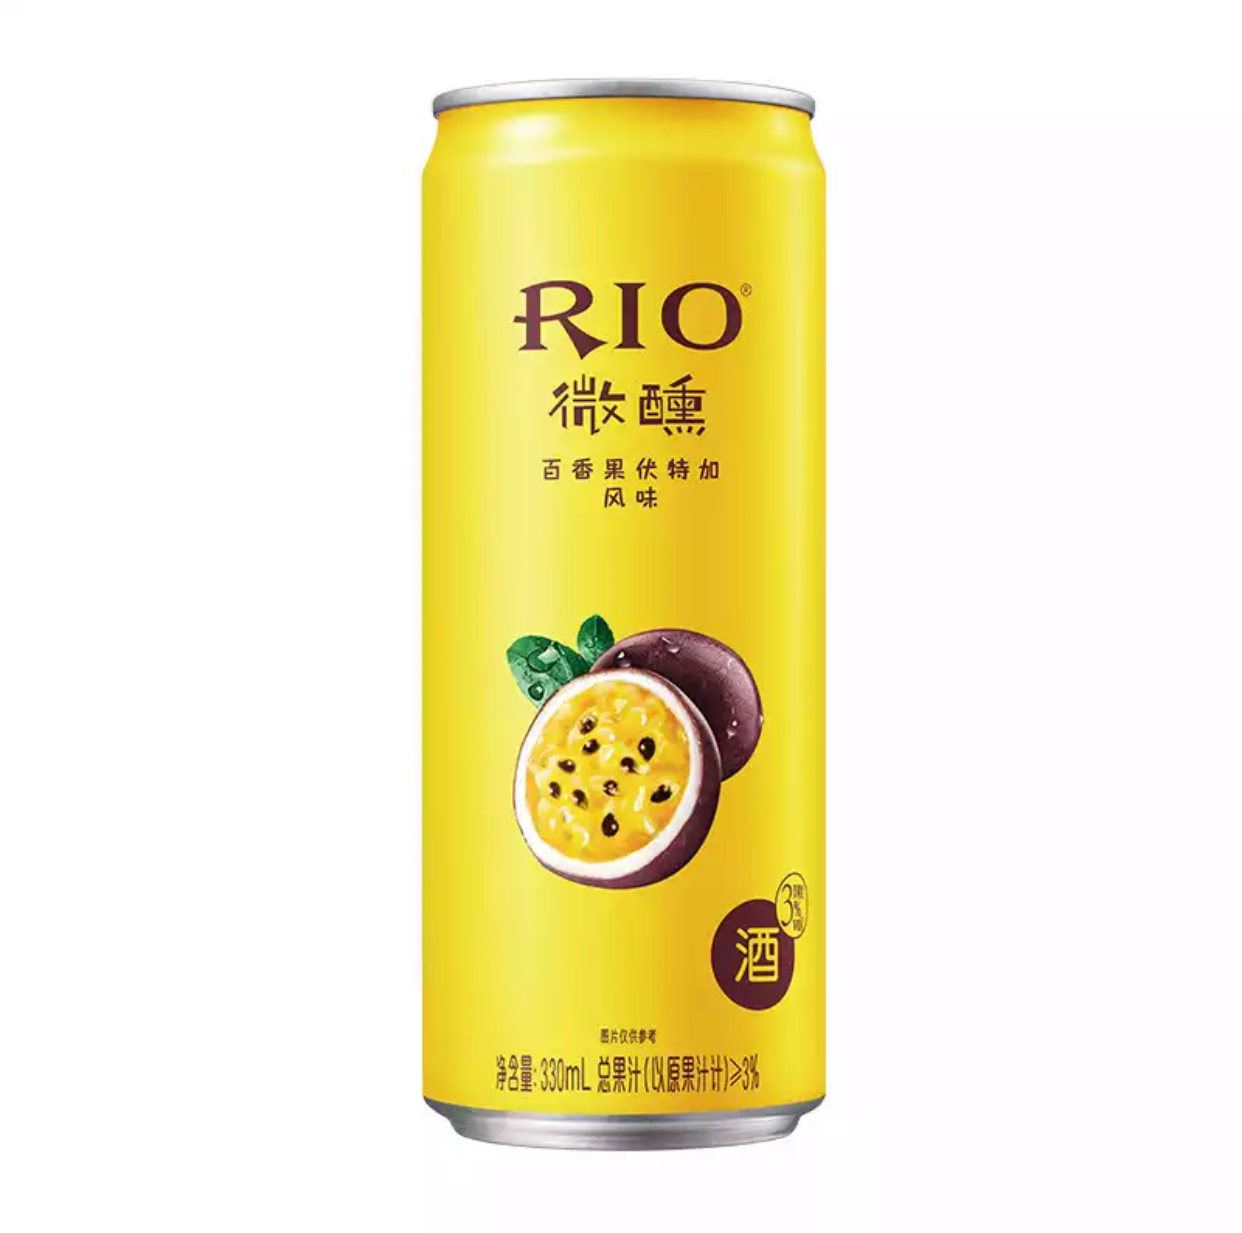 rio微醺百香果伏特加风味鸡尾酒330ml罐